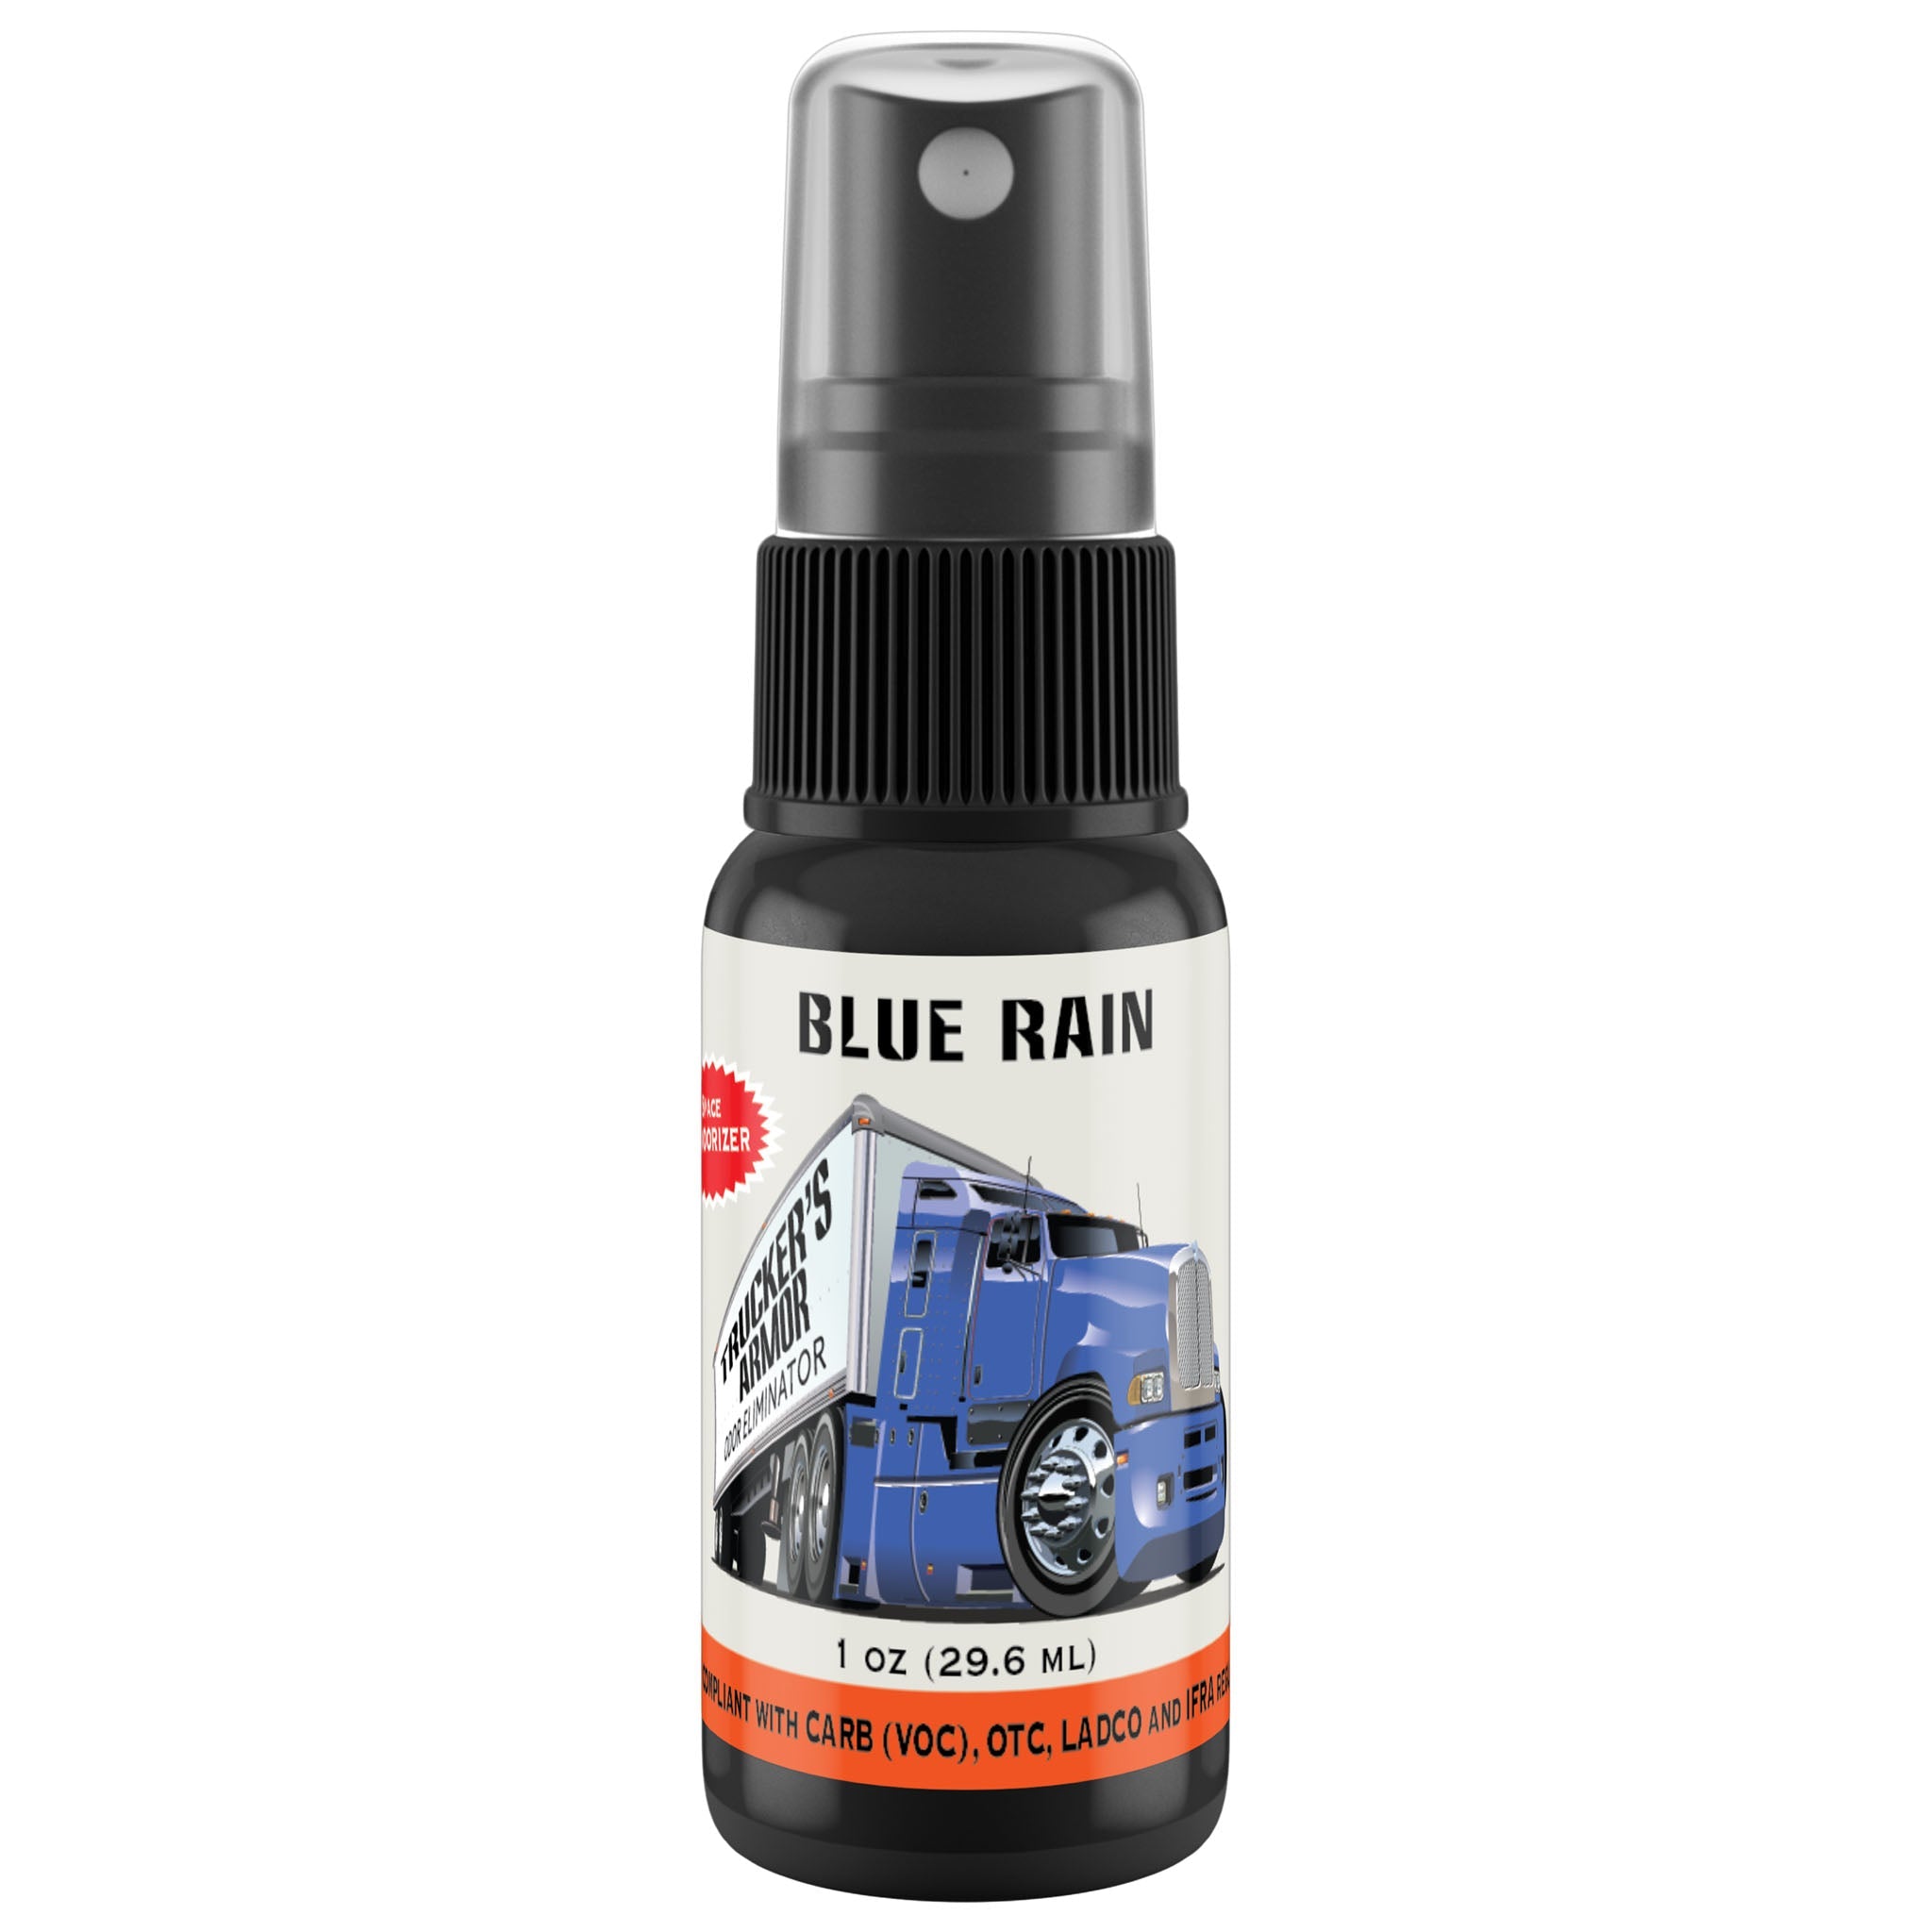 Trucker's Armor Odor Eliminator - Blue Rain Scent